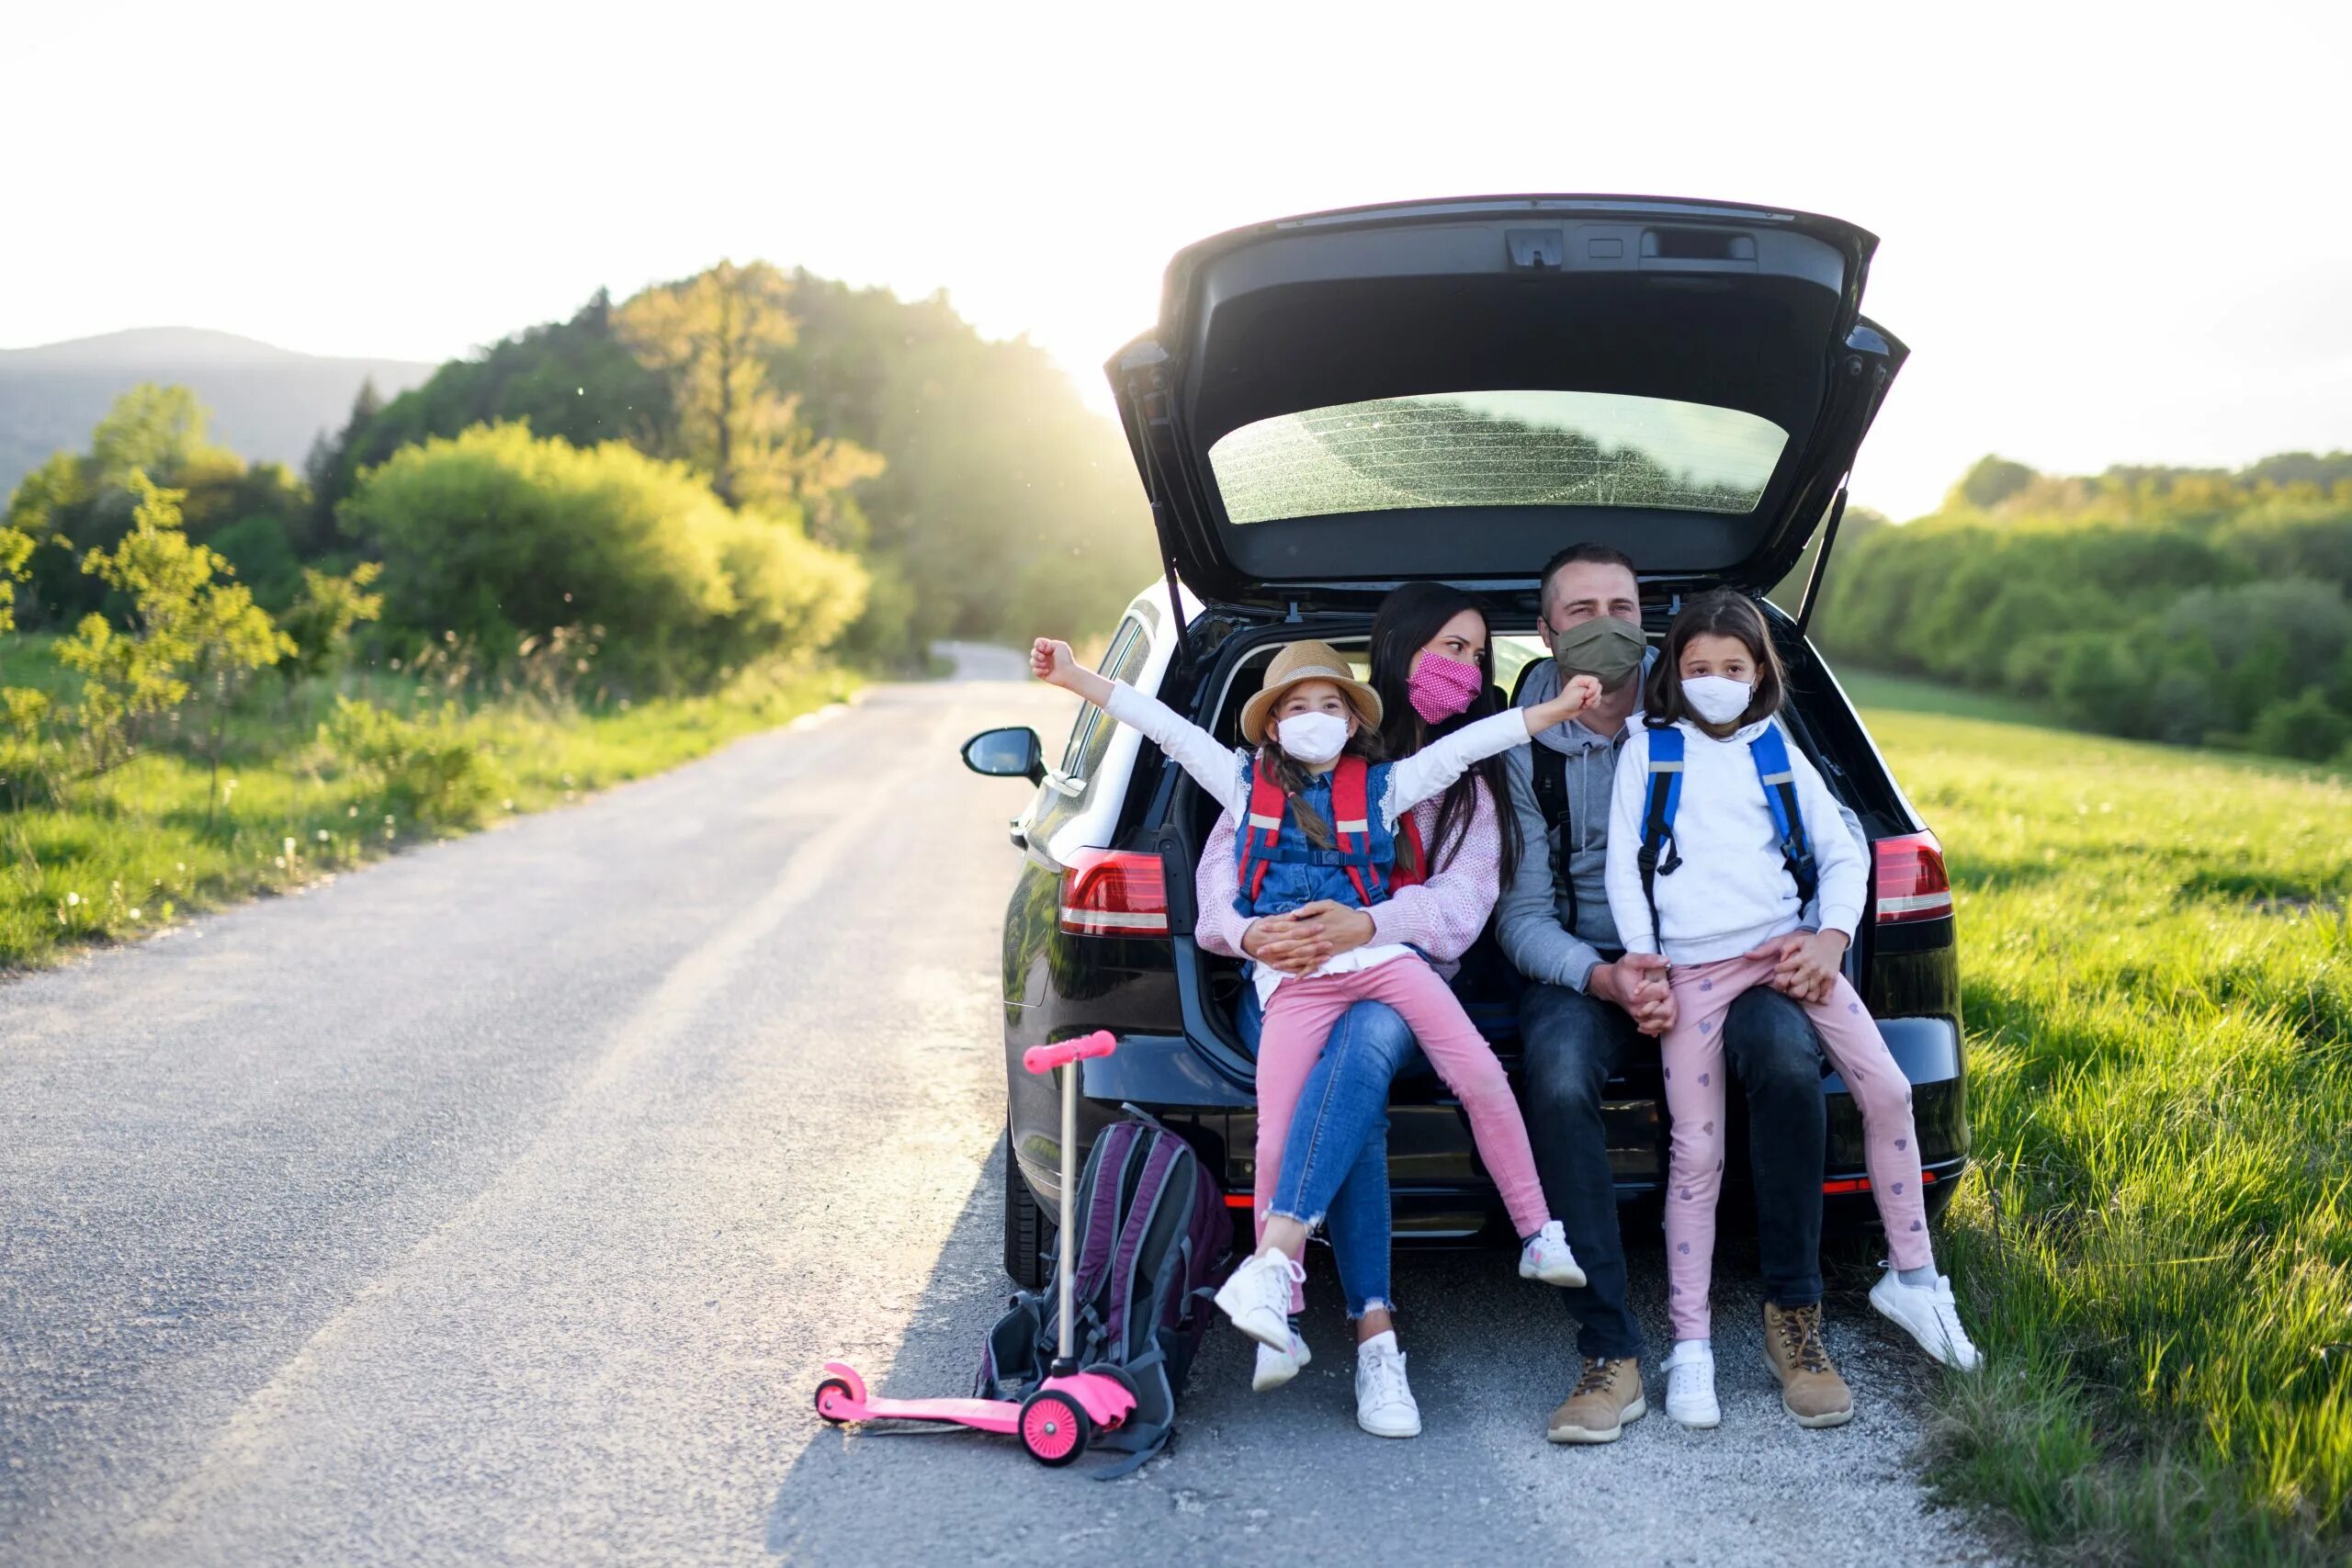 C go family. Путешествие на автомобиле. Путешествие с семьей. Семья путешествует. Семейная машина для путешествий.